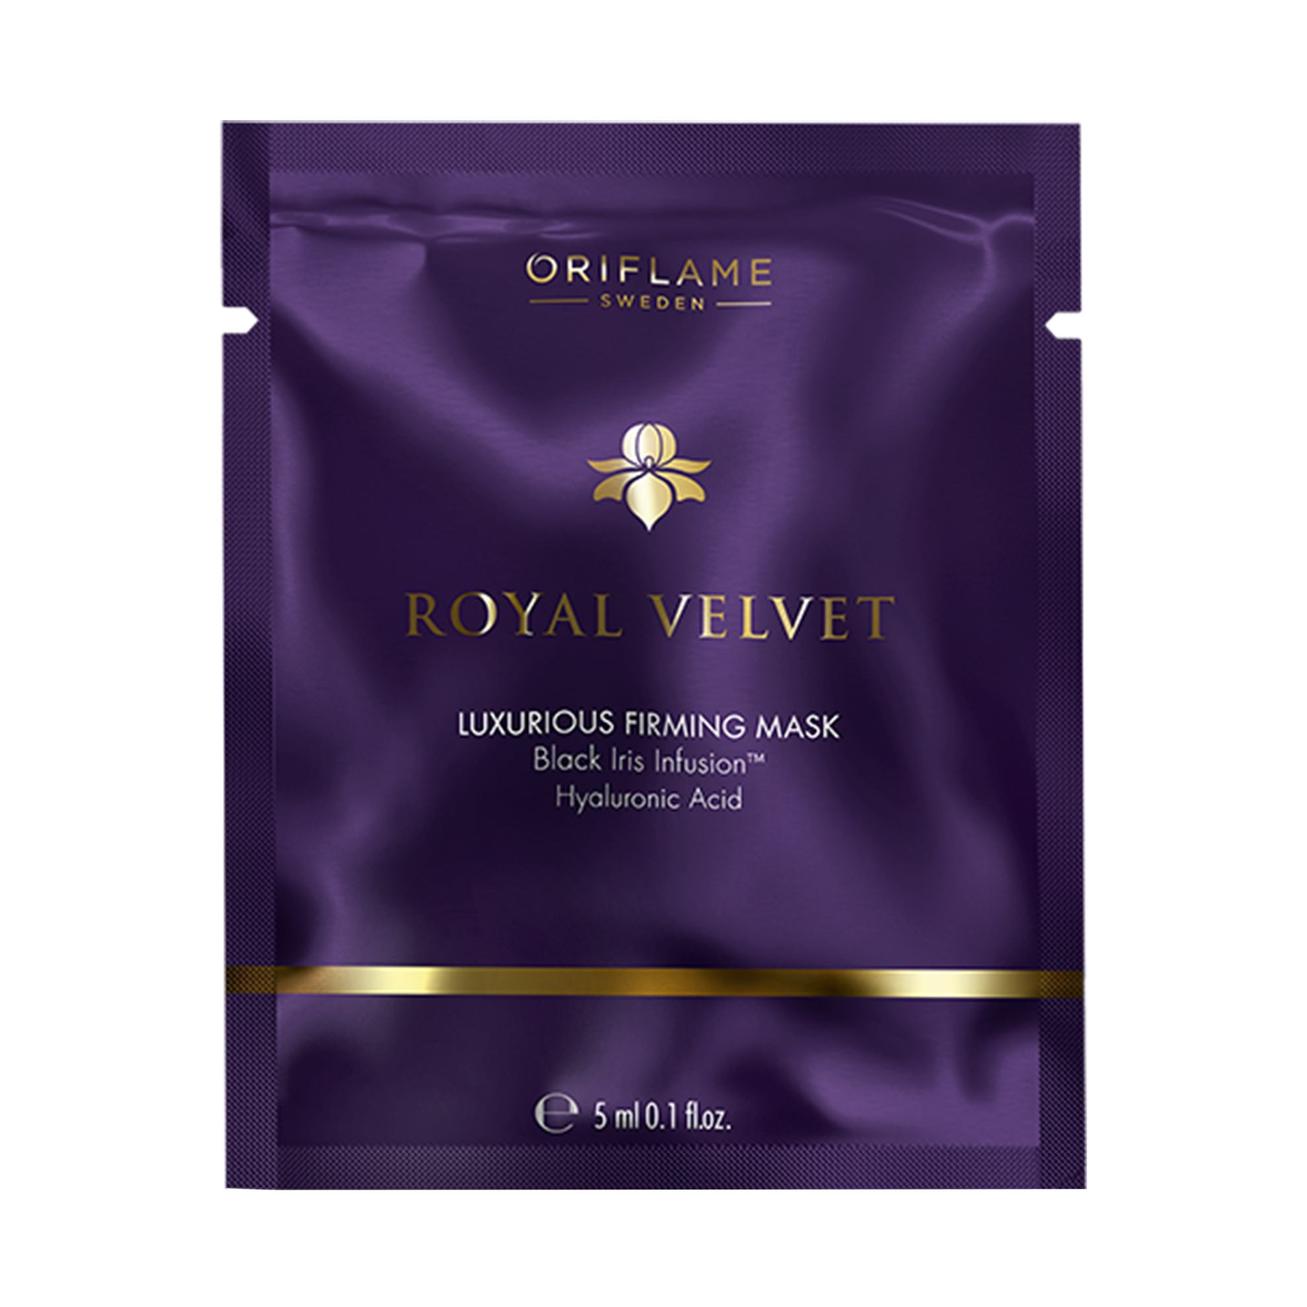 Oferta de Mascarilla Reafirmante Royal Velvet por S/ 4,9 en Oriflame